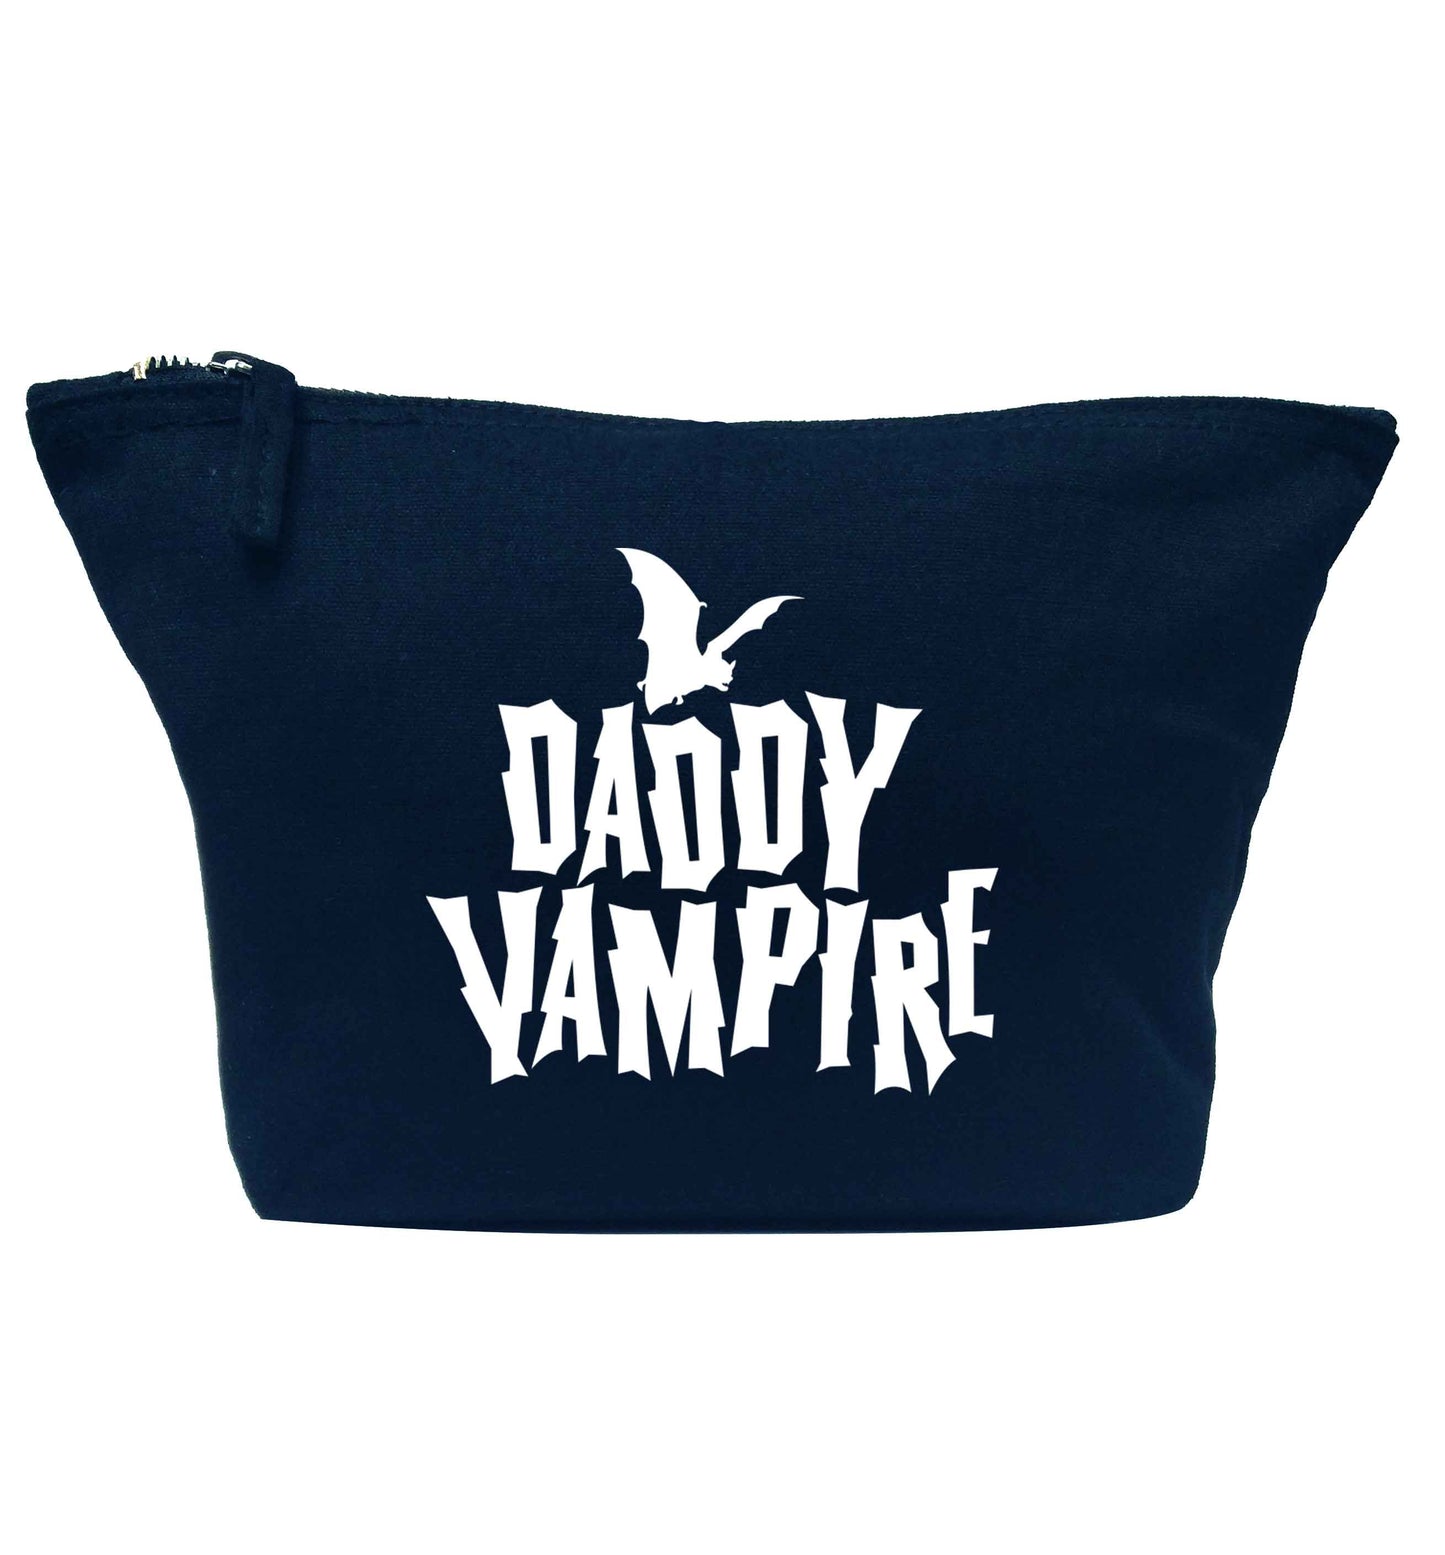 Daddy vampire navy makeup bag